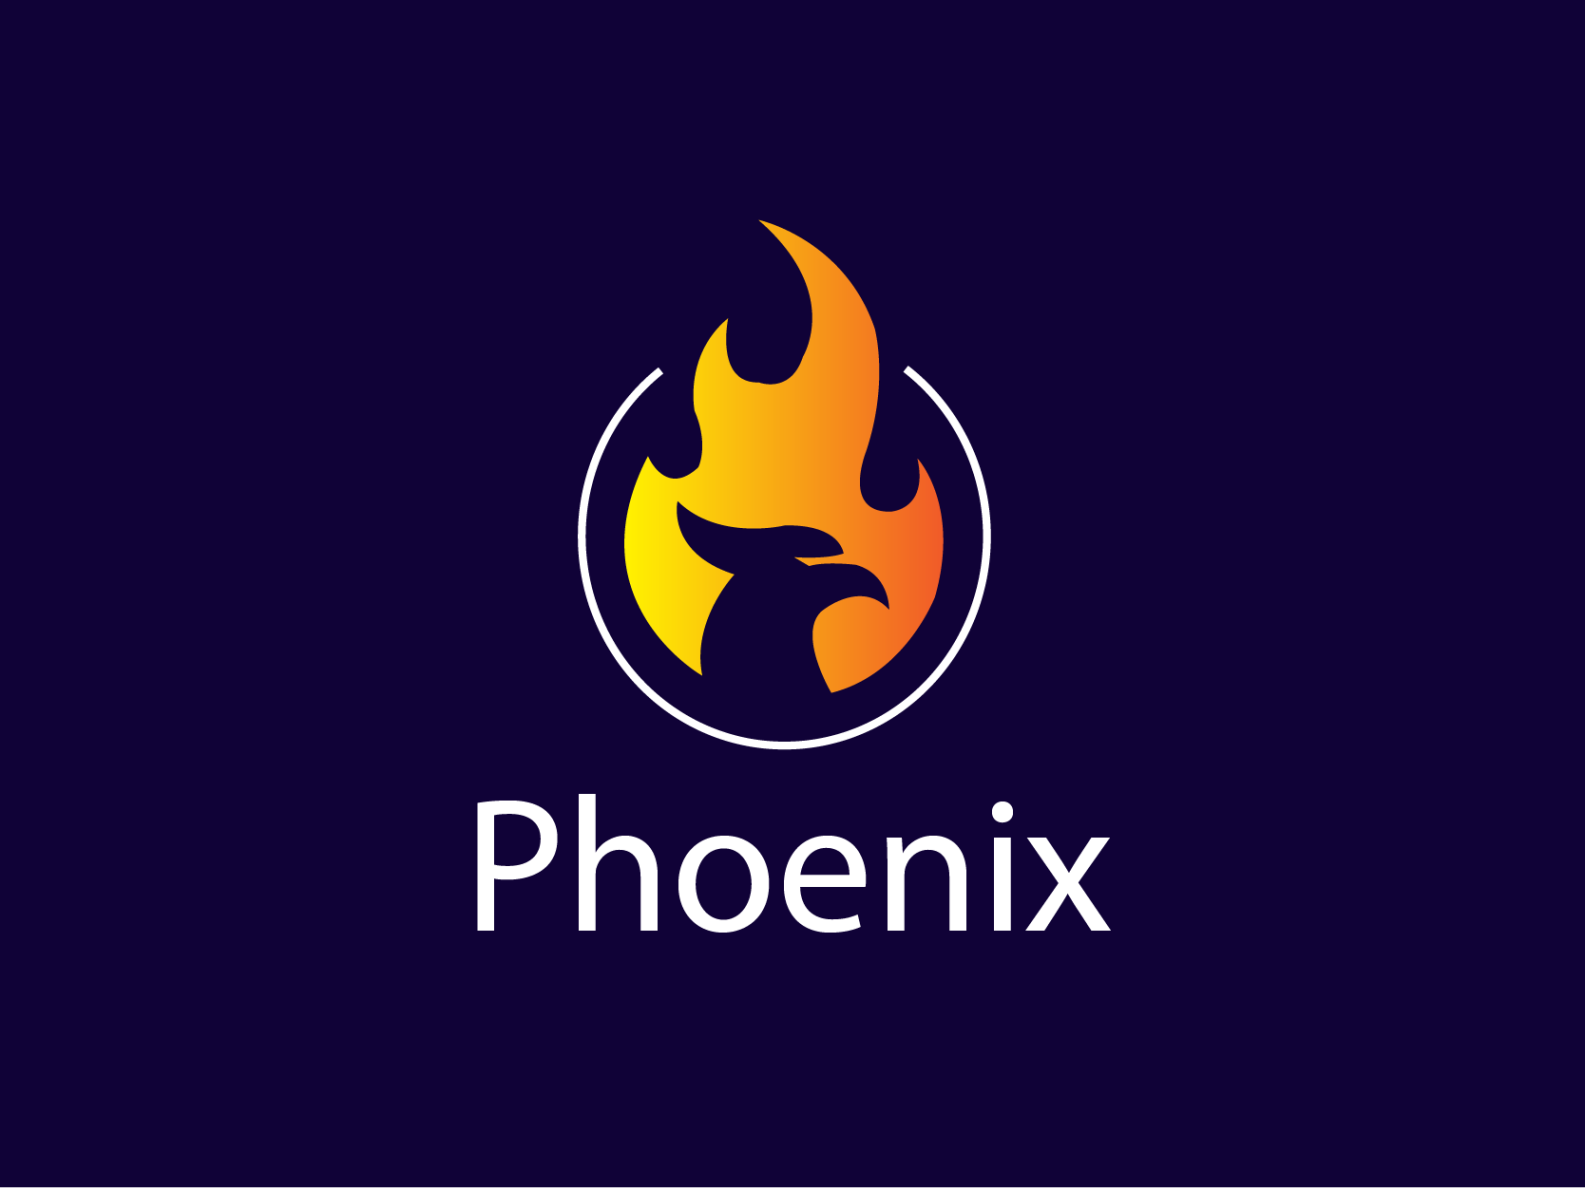 Phoenix logo by Sreelakshmi Rahul on Dribbble